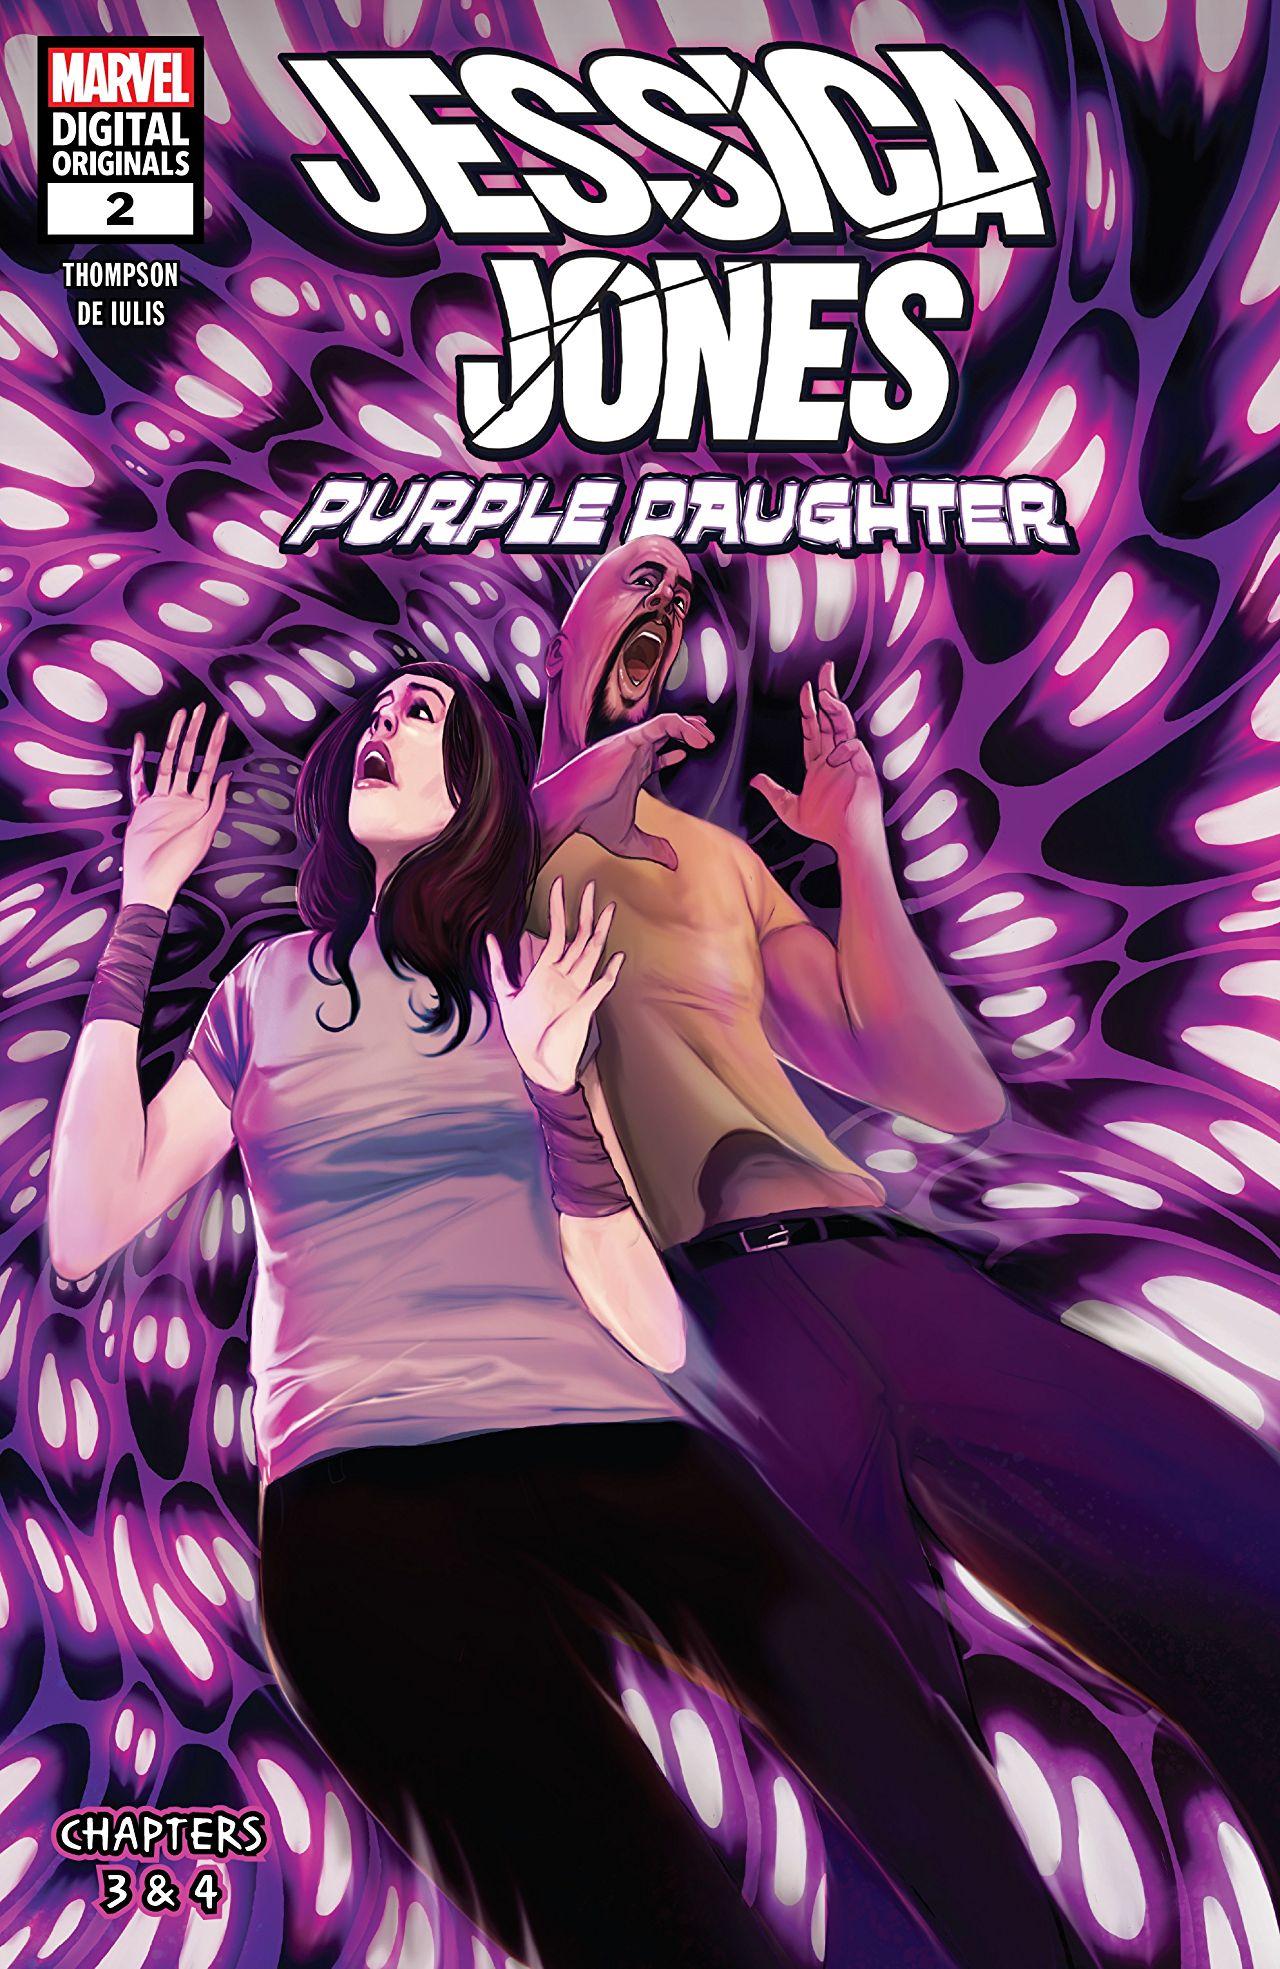 Jessica Jones: Purple Daughter - Marvel Digital Original Vol. 1 #2